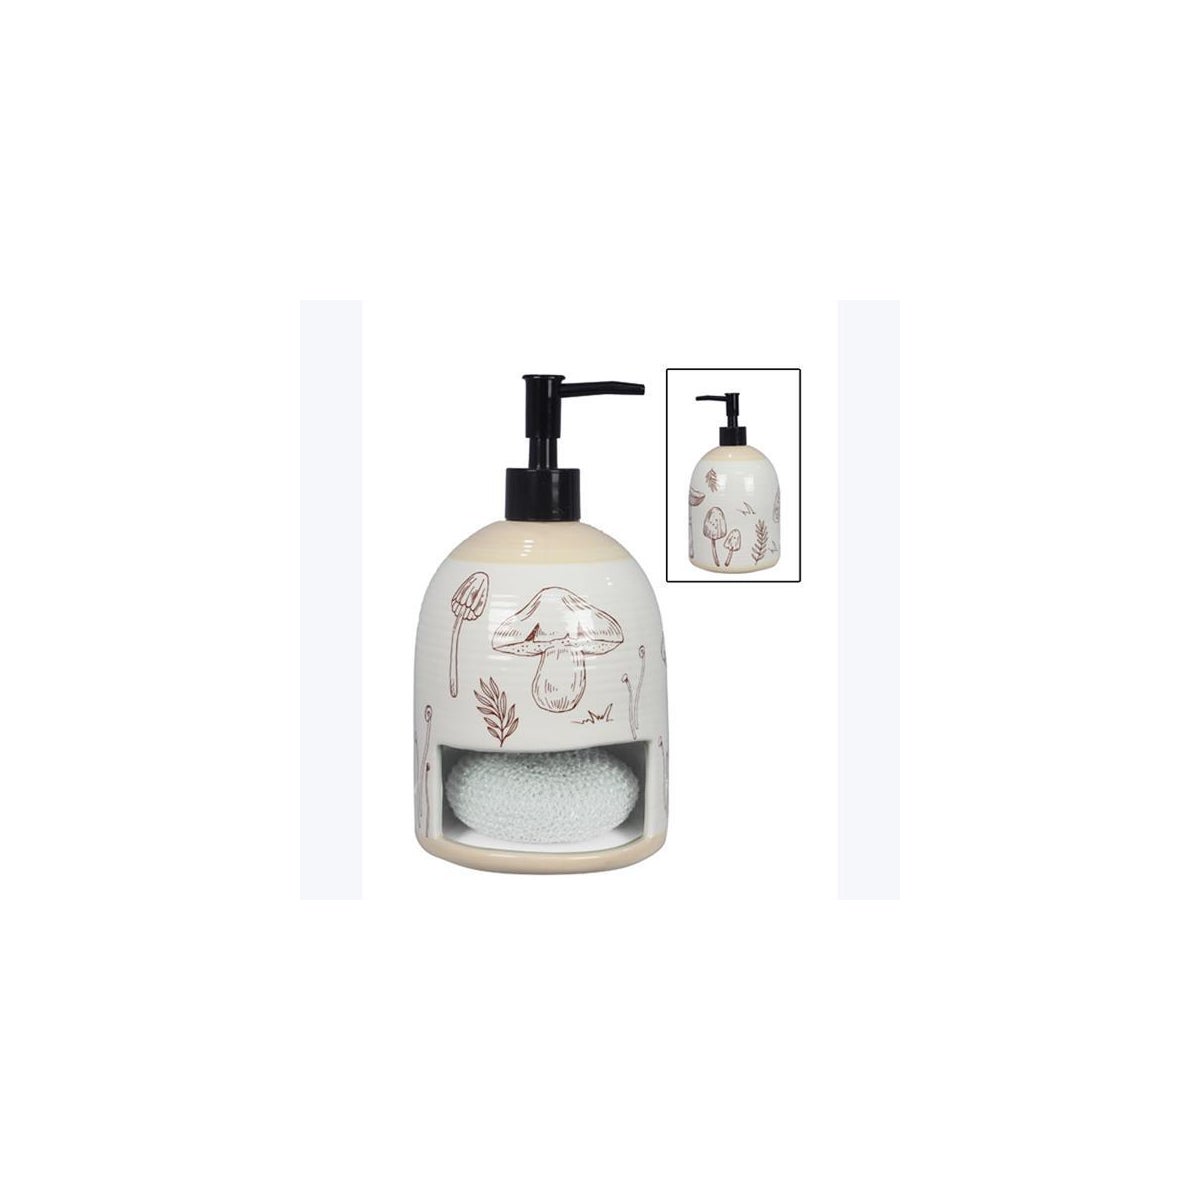 Ceramic Mushroom Soap Dispenser with Scrub Holder